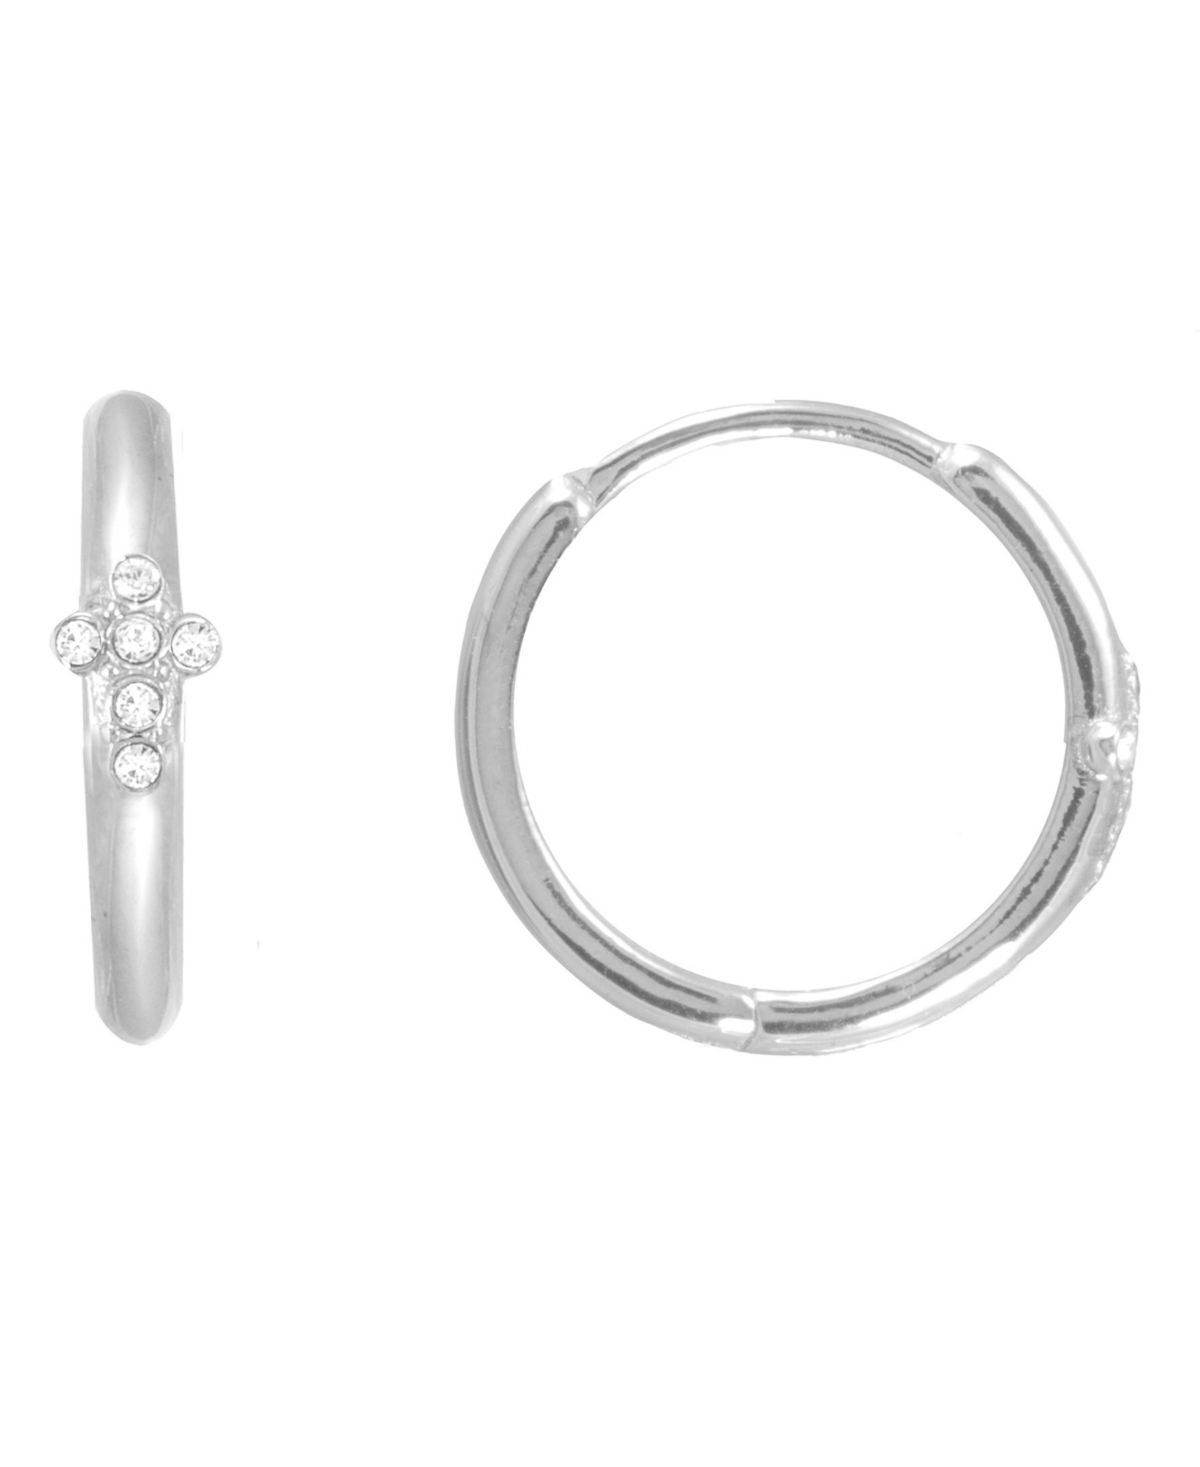 Fao Schwarz Women's Sterling Silver Cross Hoop Earrings with Crystal Stone Accent